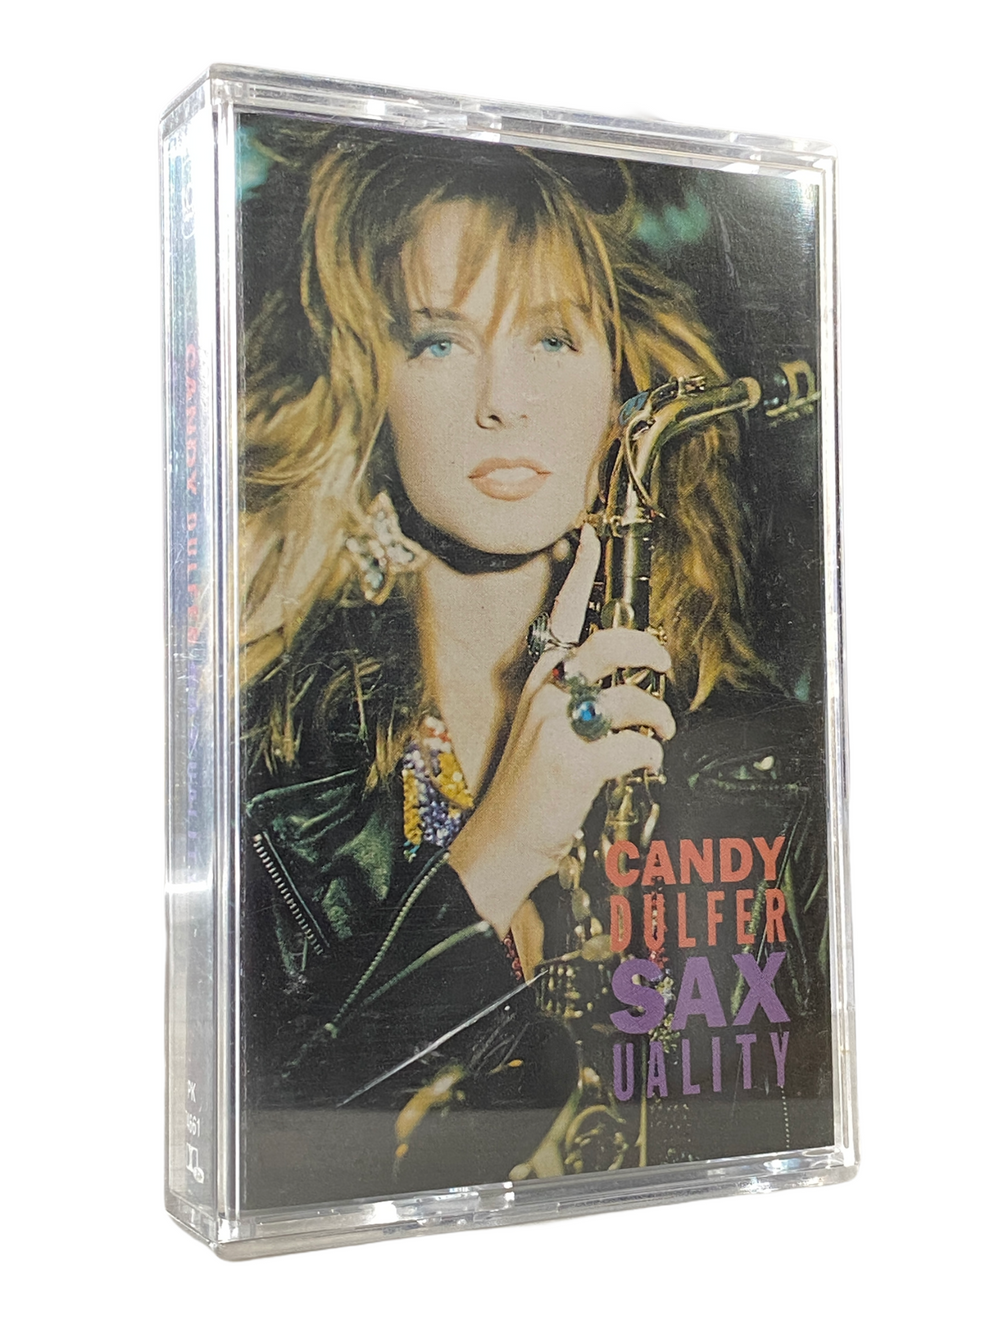 Prince – Candy Dulfer Saxuality Original Cassette Tape UK EU 1990 Release Prince